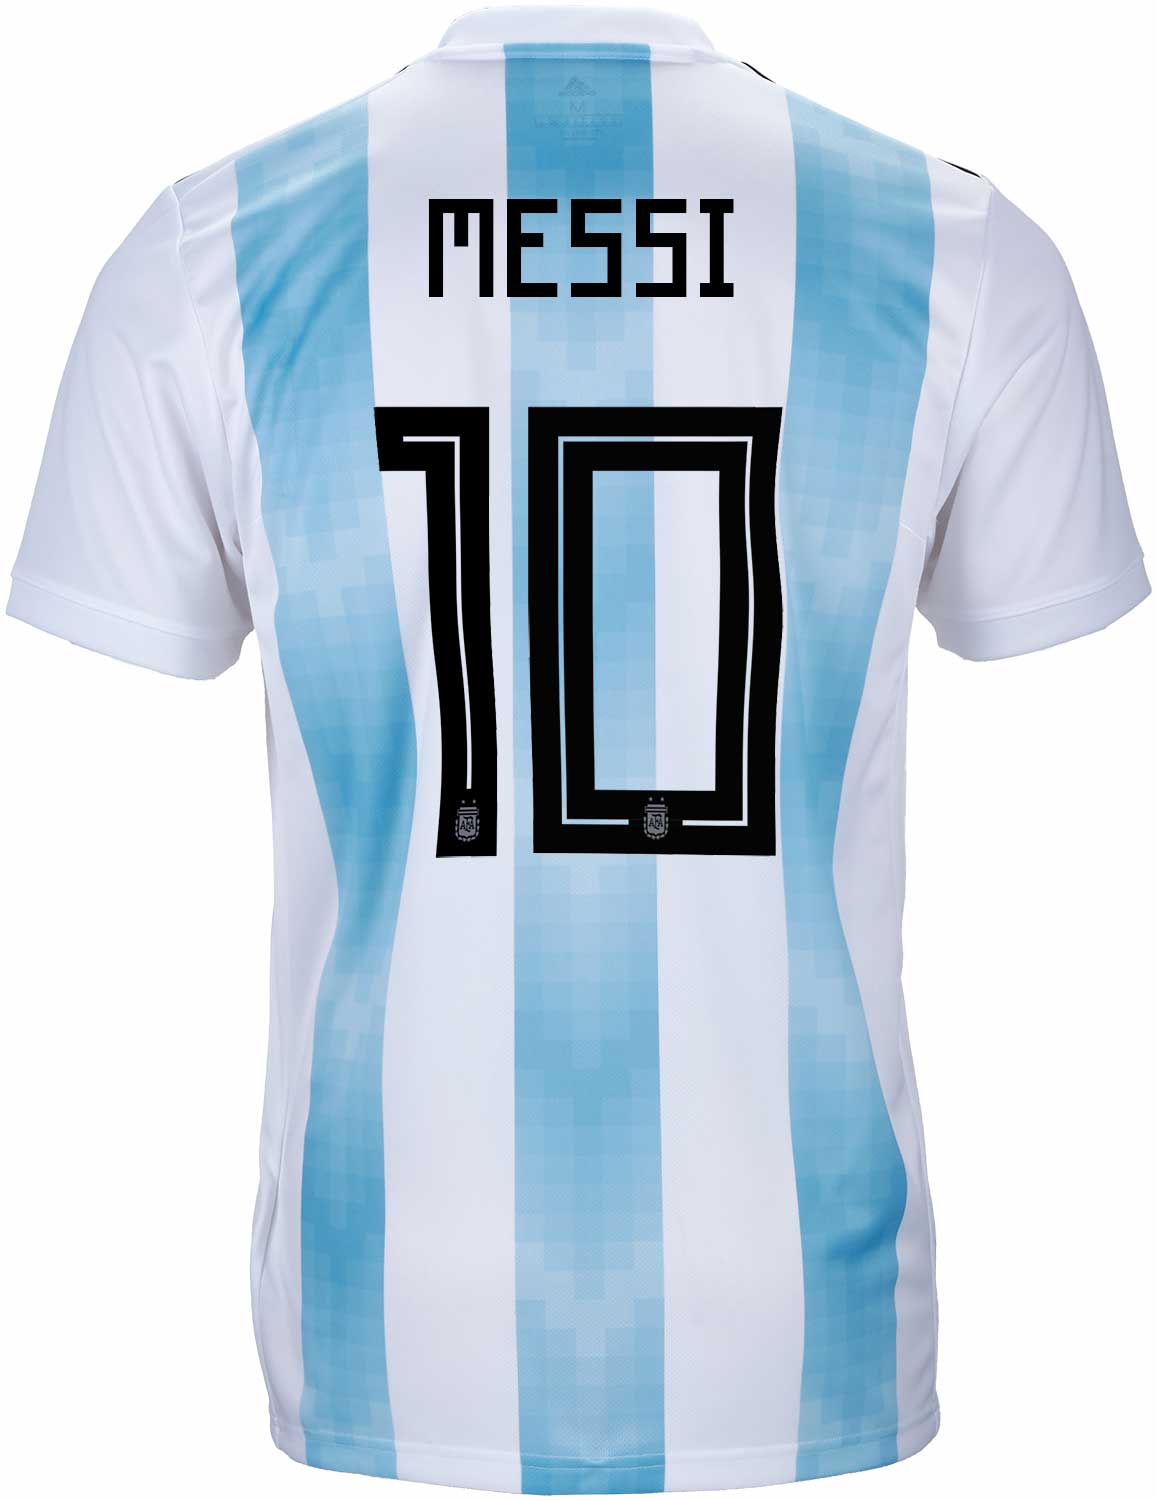 argentina jersey 2018